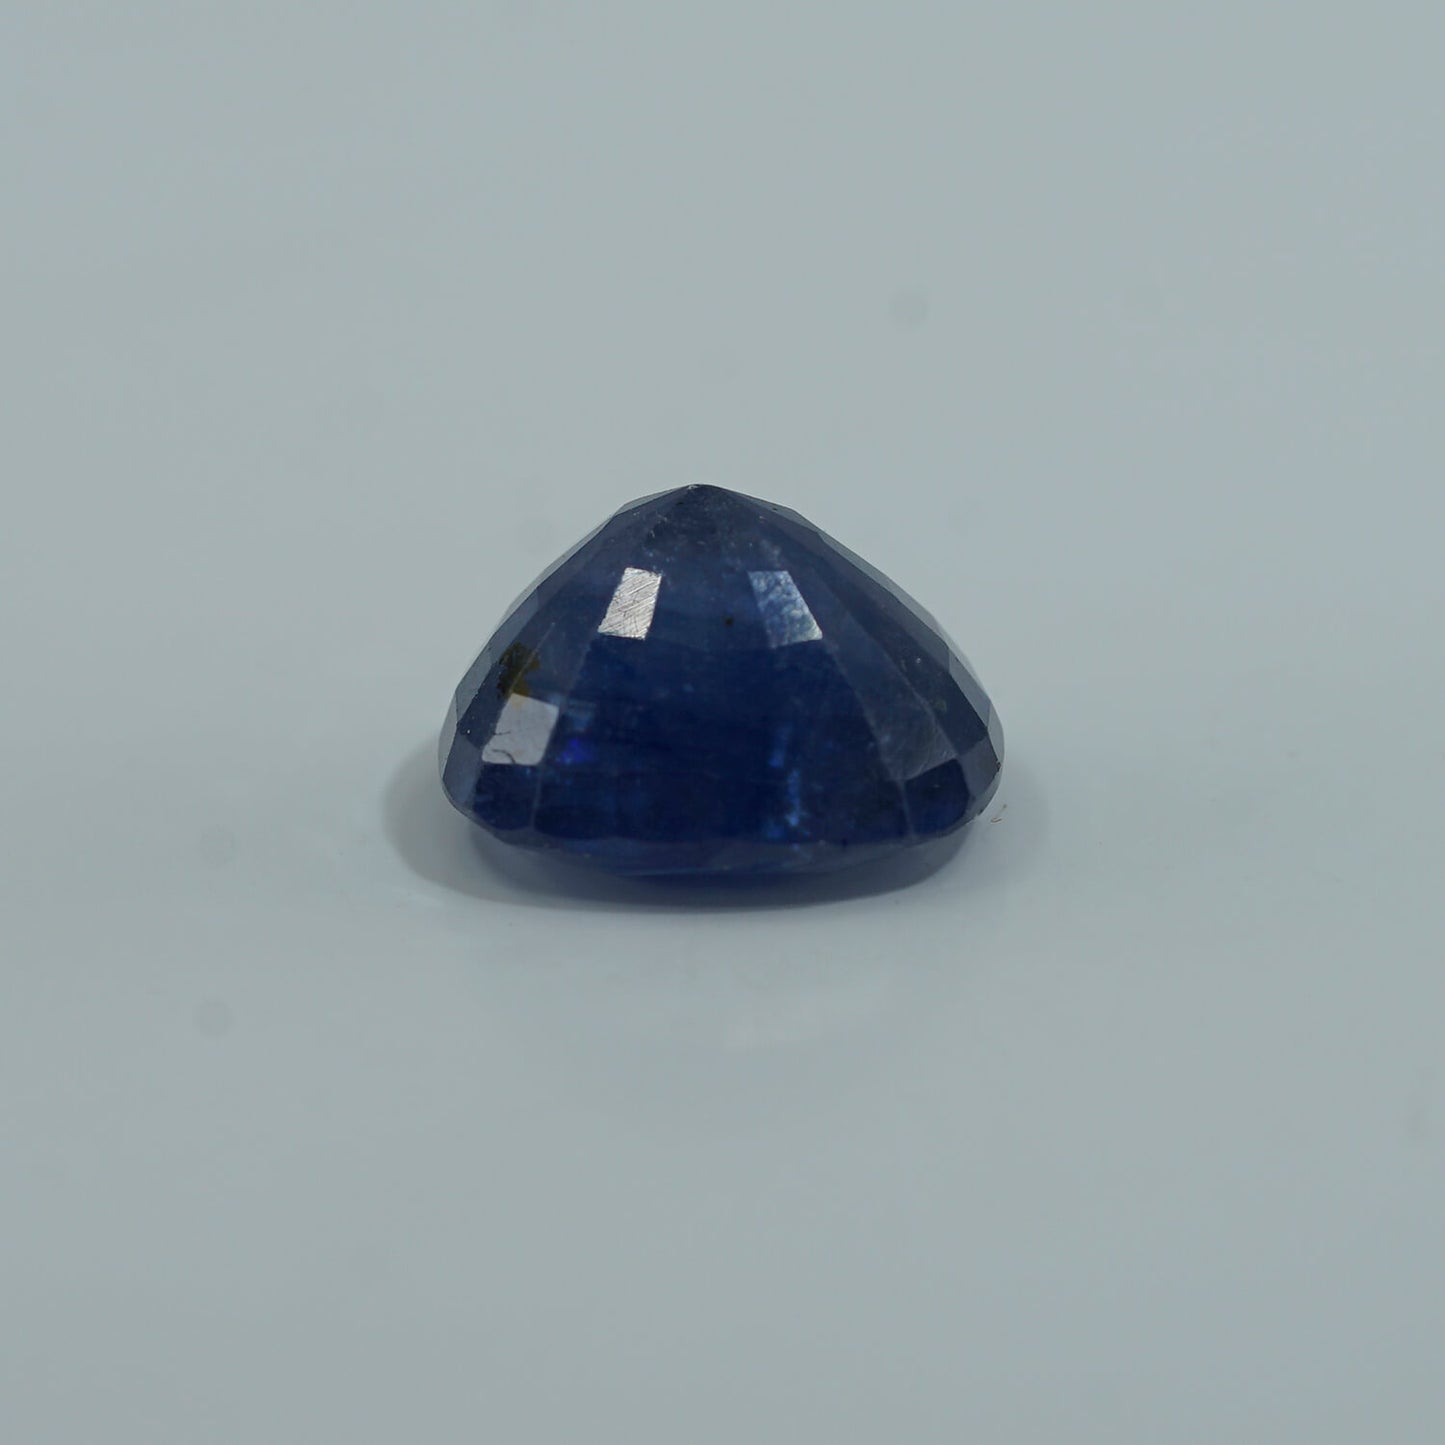 Vedic Crystals Blue sapphire gemstone (neelam nag) stone 7 ratti best price image 489